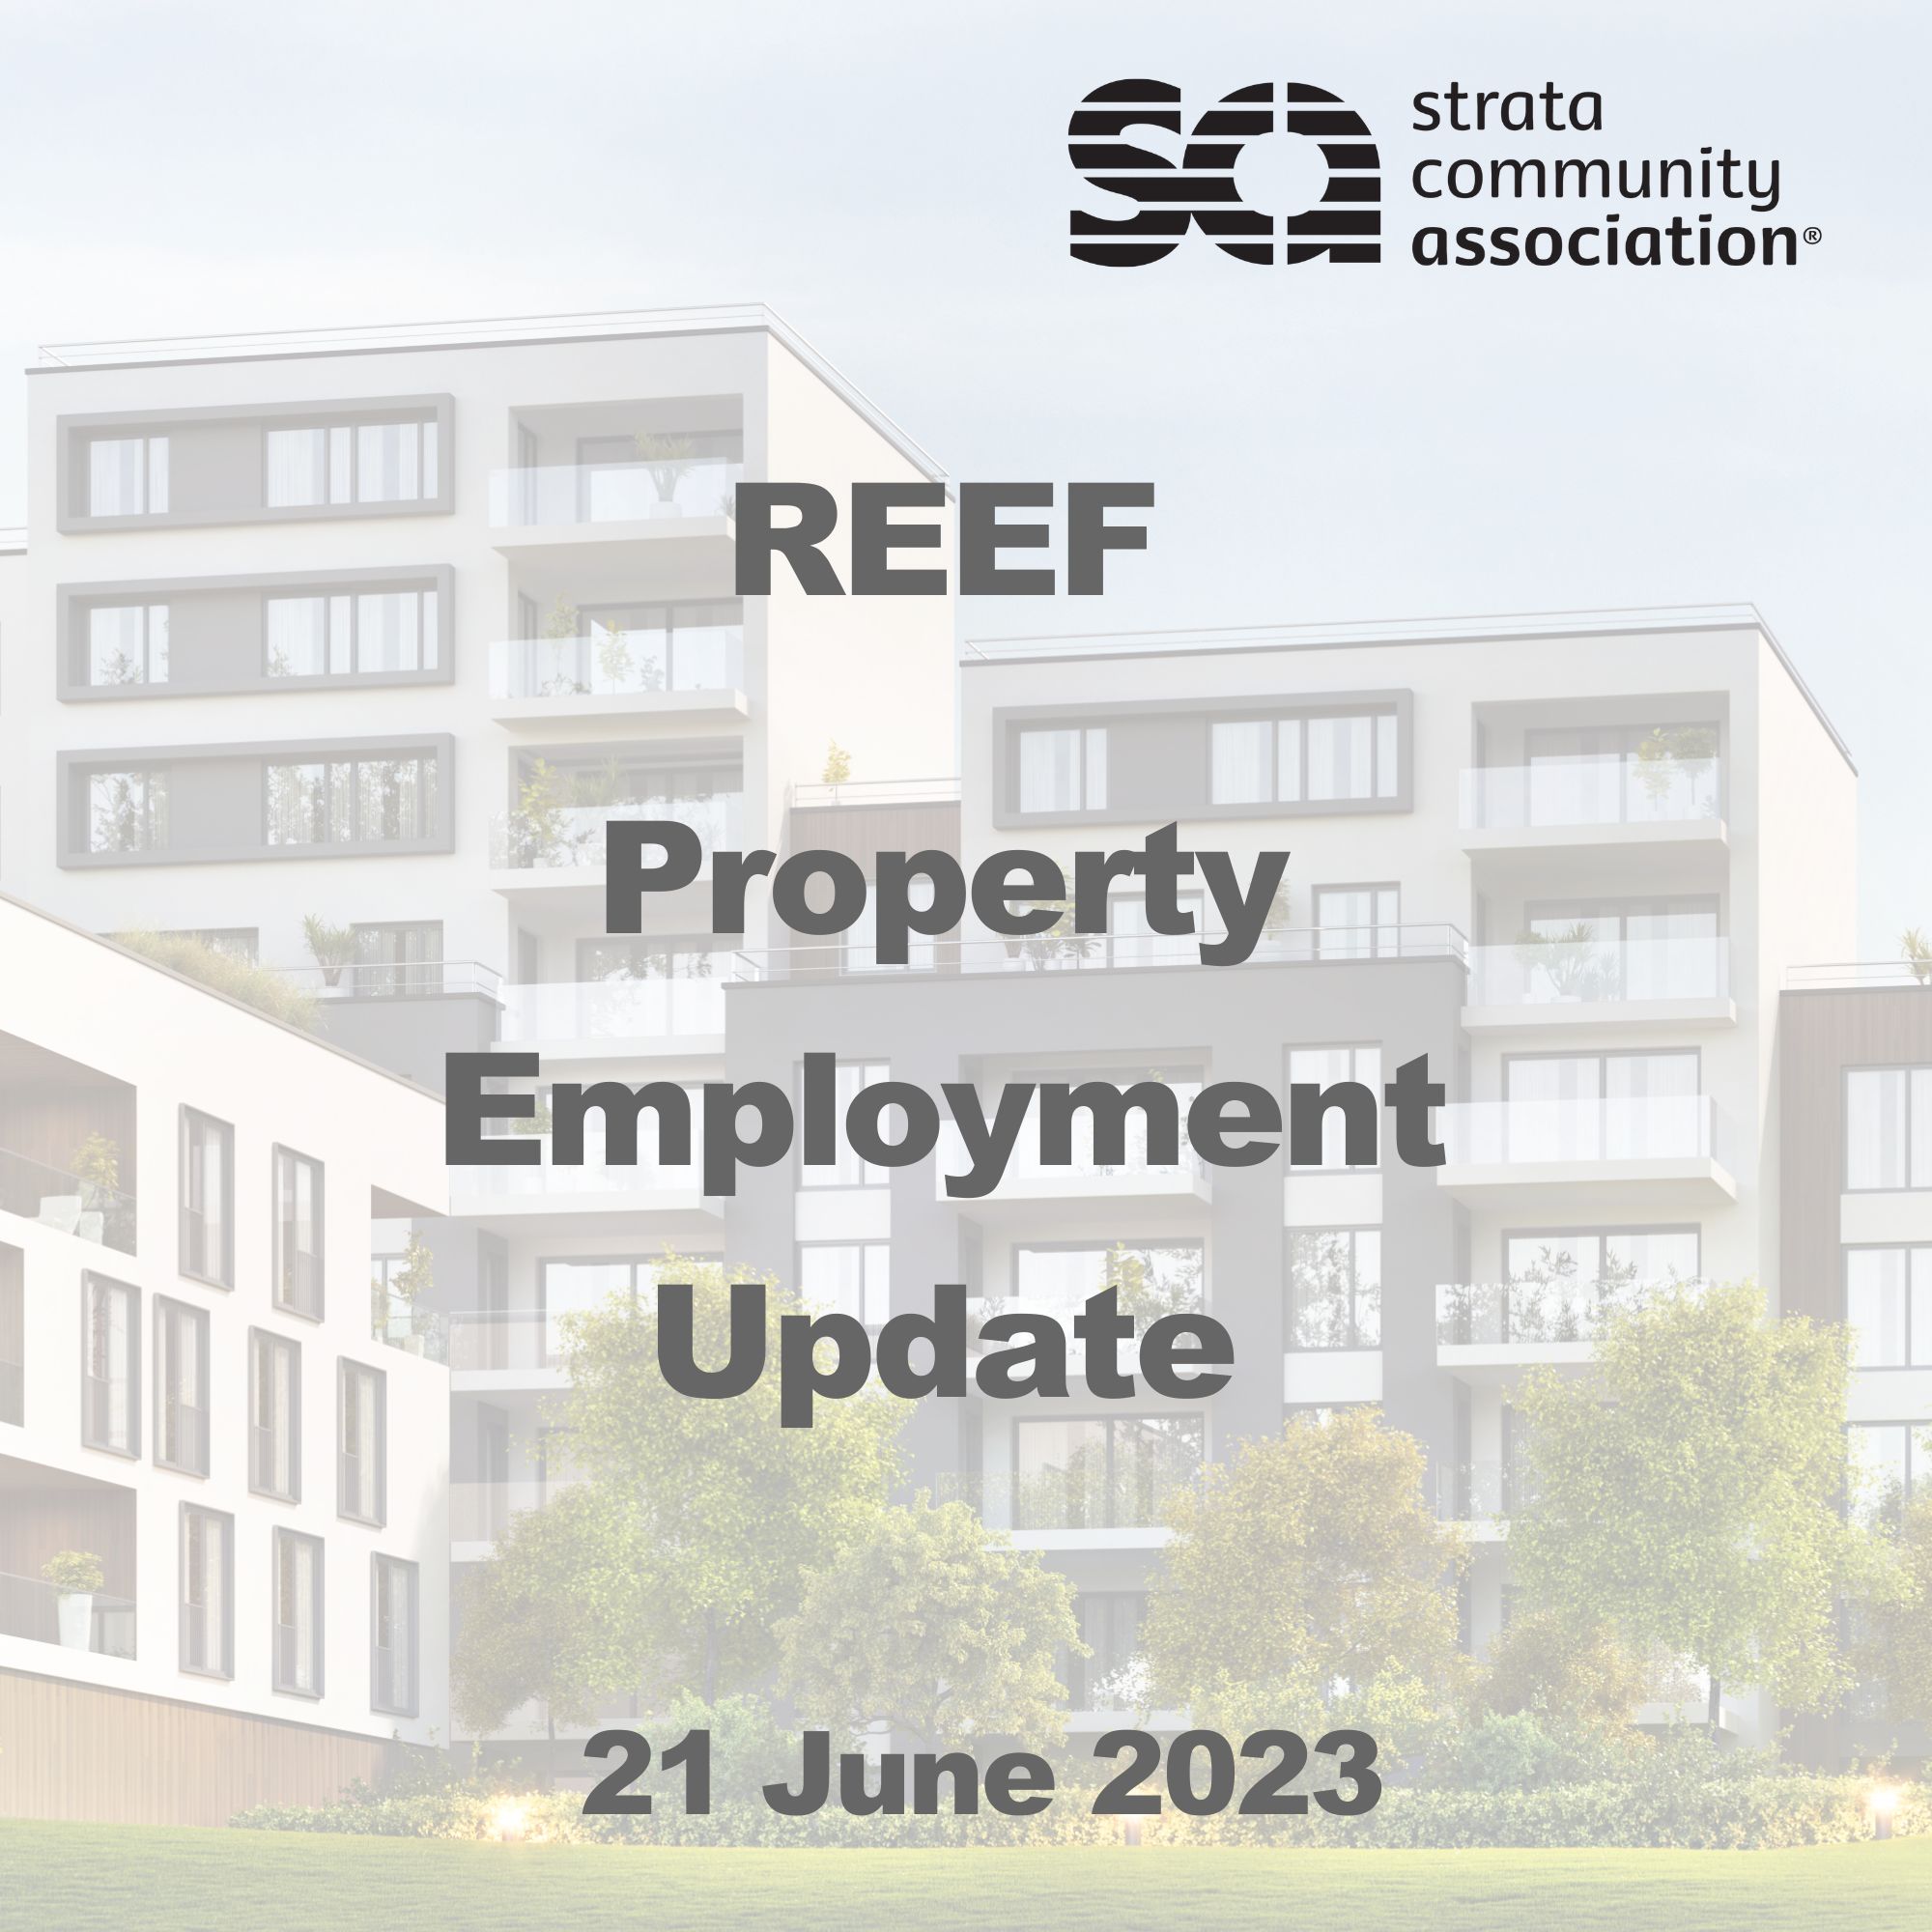 REEF Property Employment Update Webinar